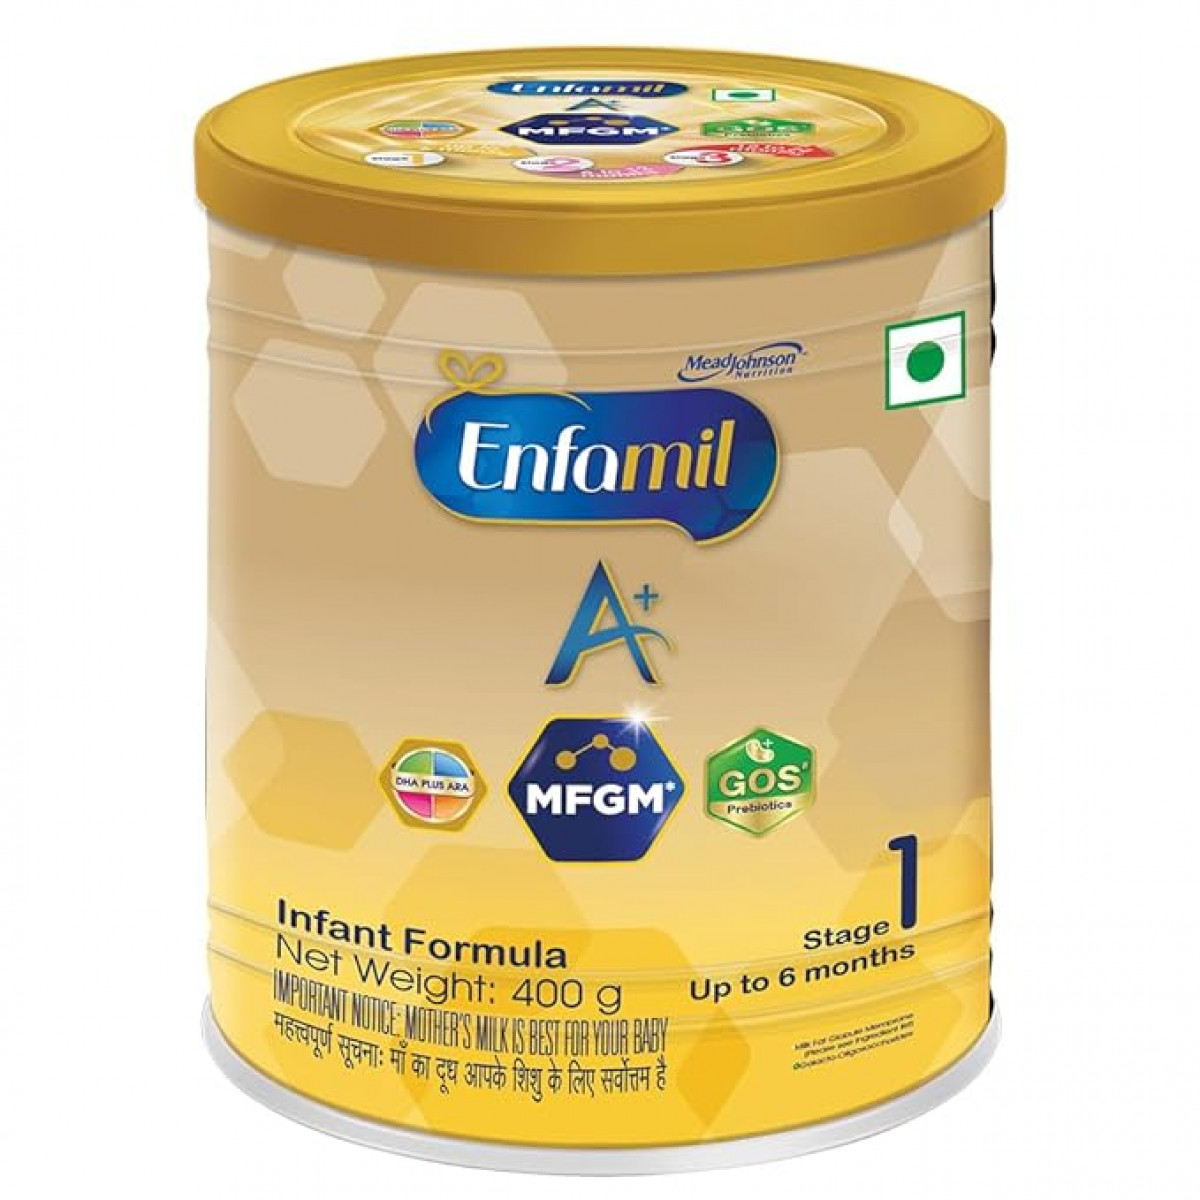 Enfamil A+ Infant Formula, Stage 1, Up to 6 Months 400 gm Tin